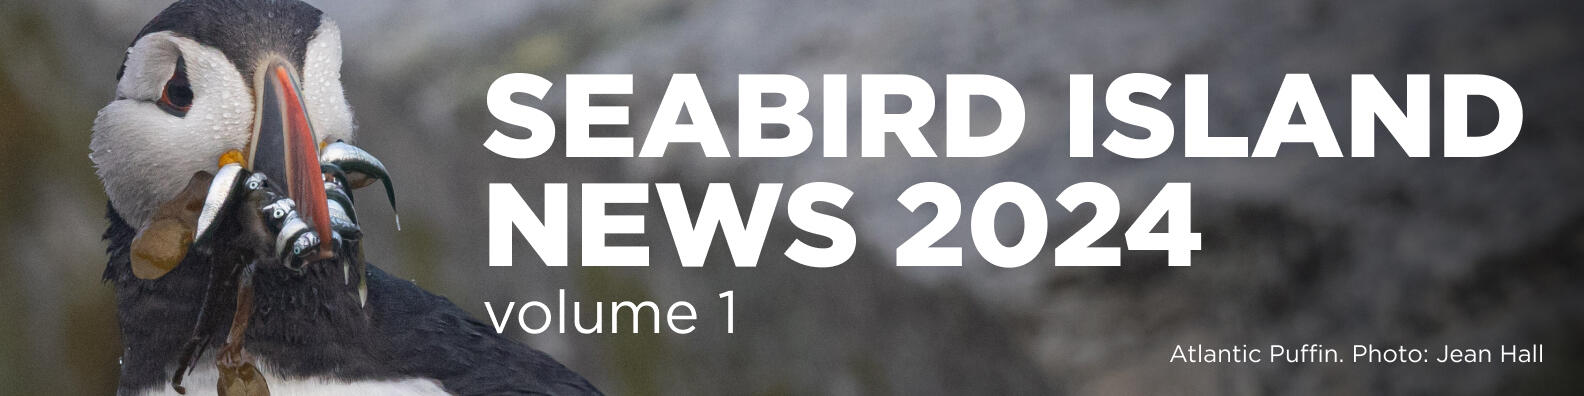 Seabird Island News Banner - Volume 01